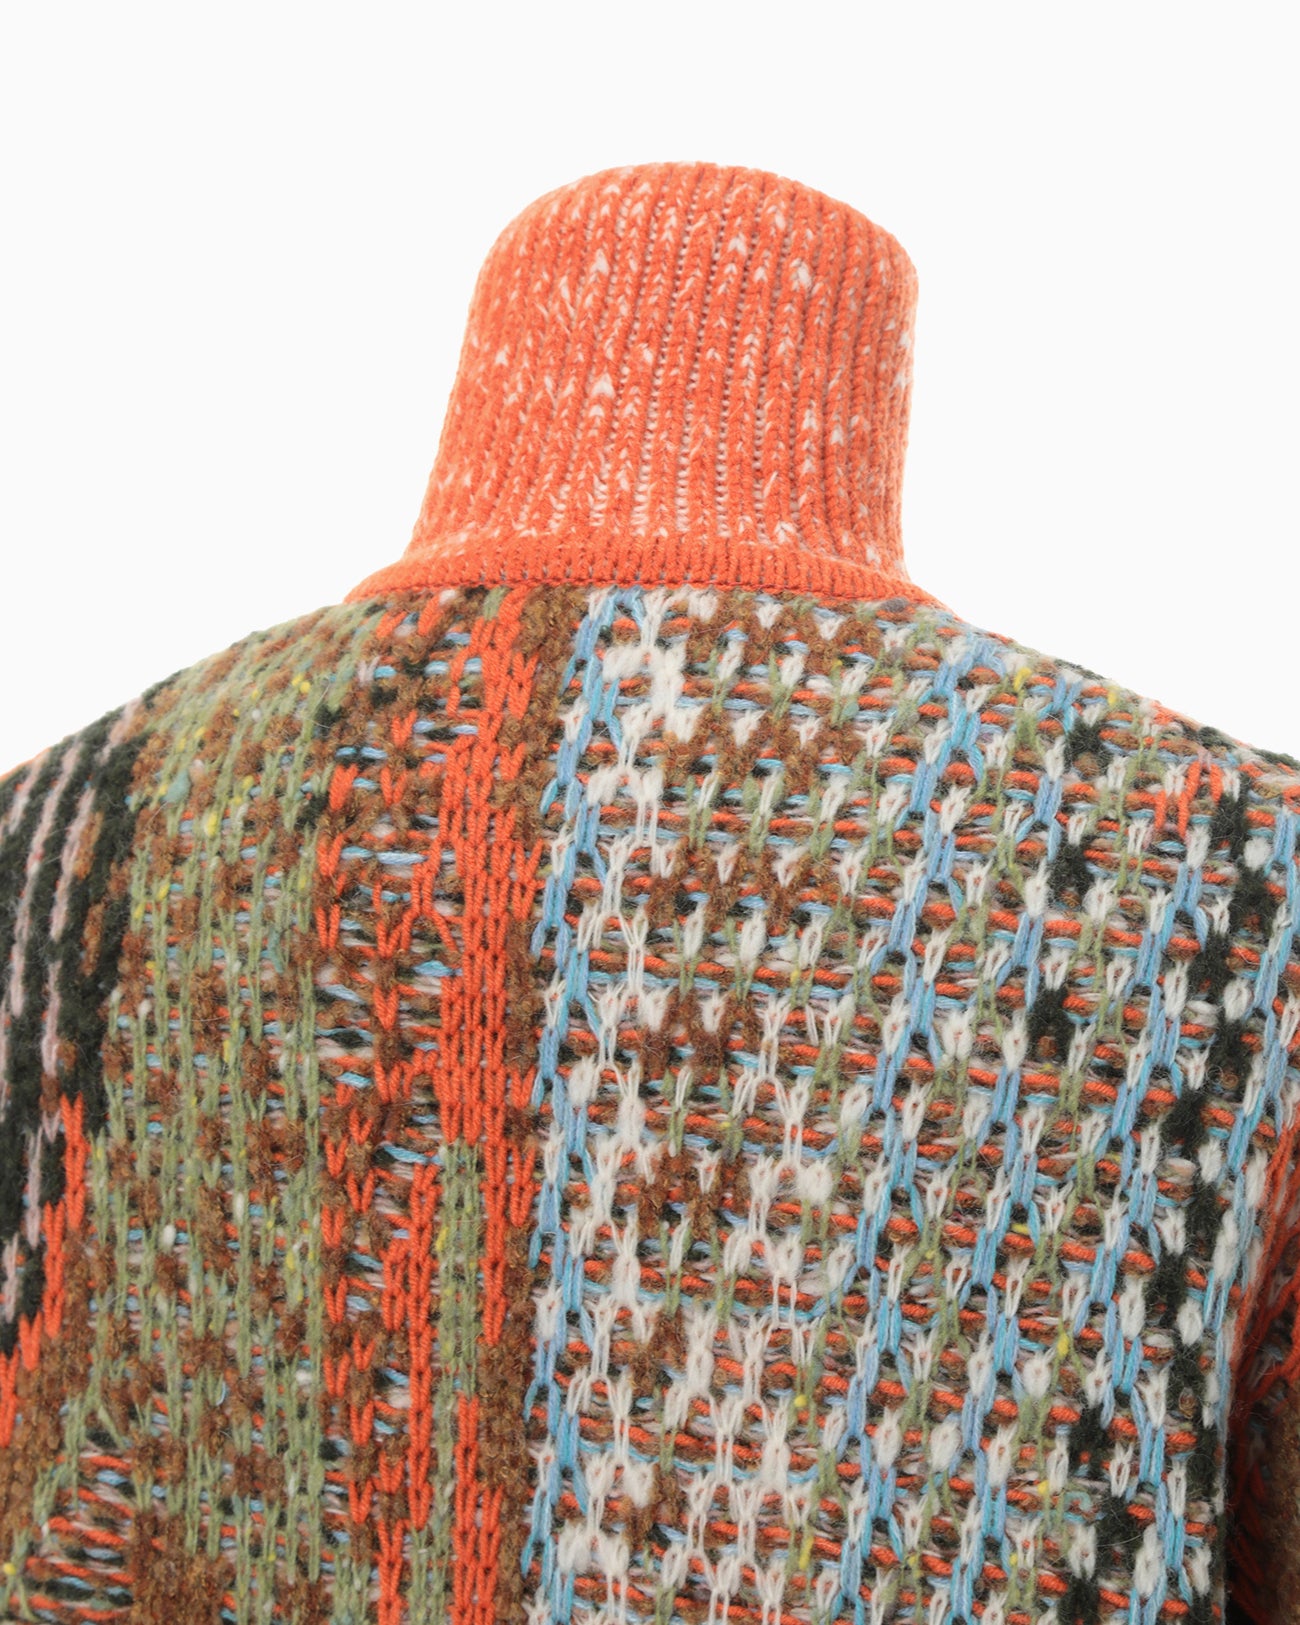 2022AW Autumn Knitted Dress